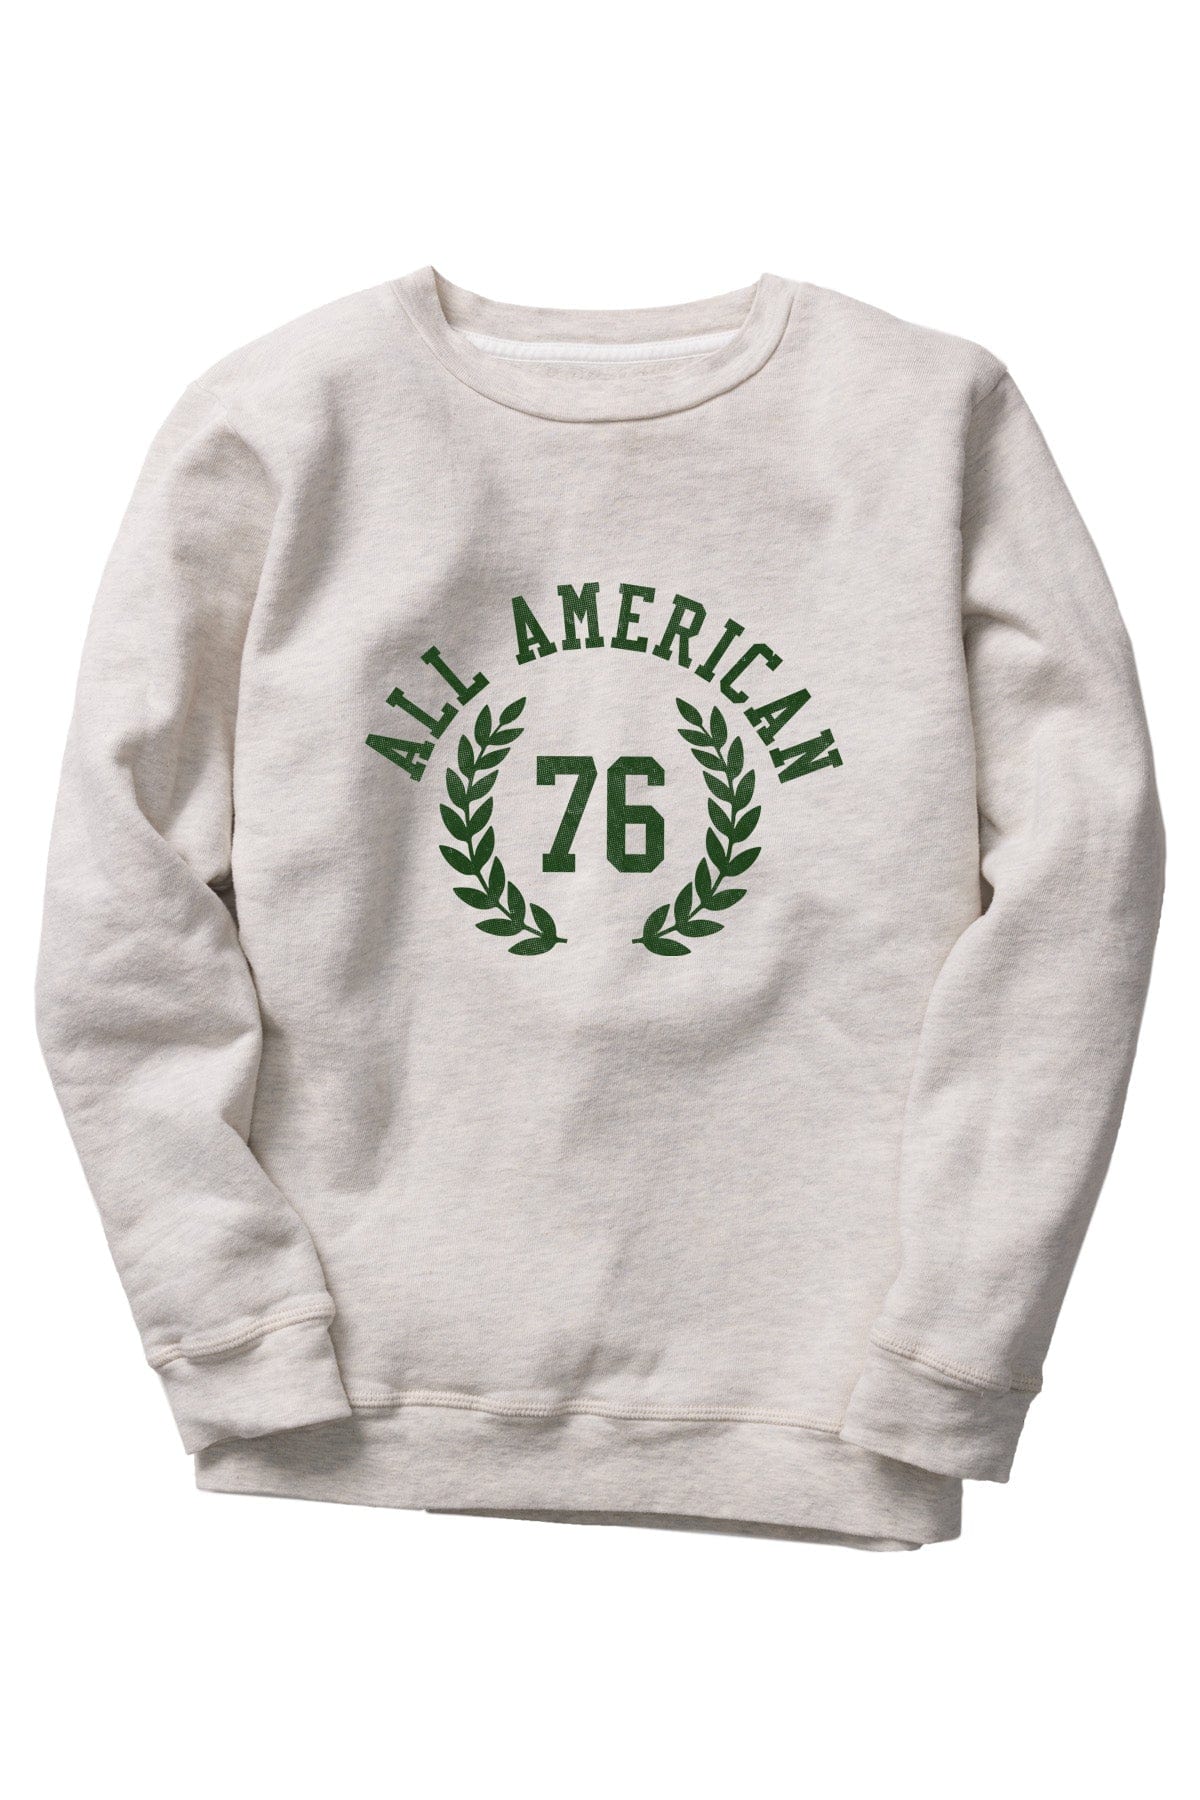 All American Sweatshirt Oatmeal / Small